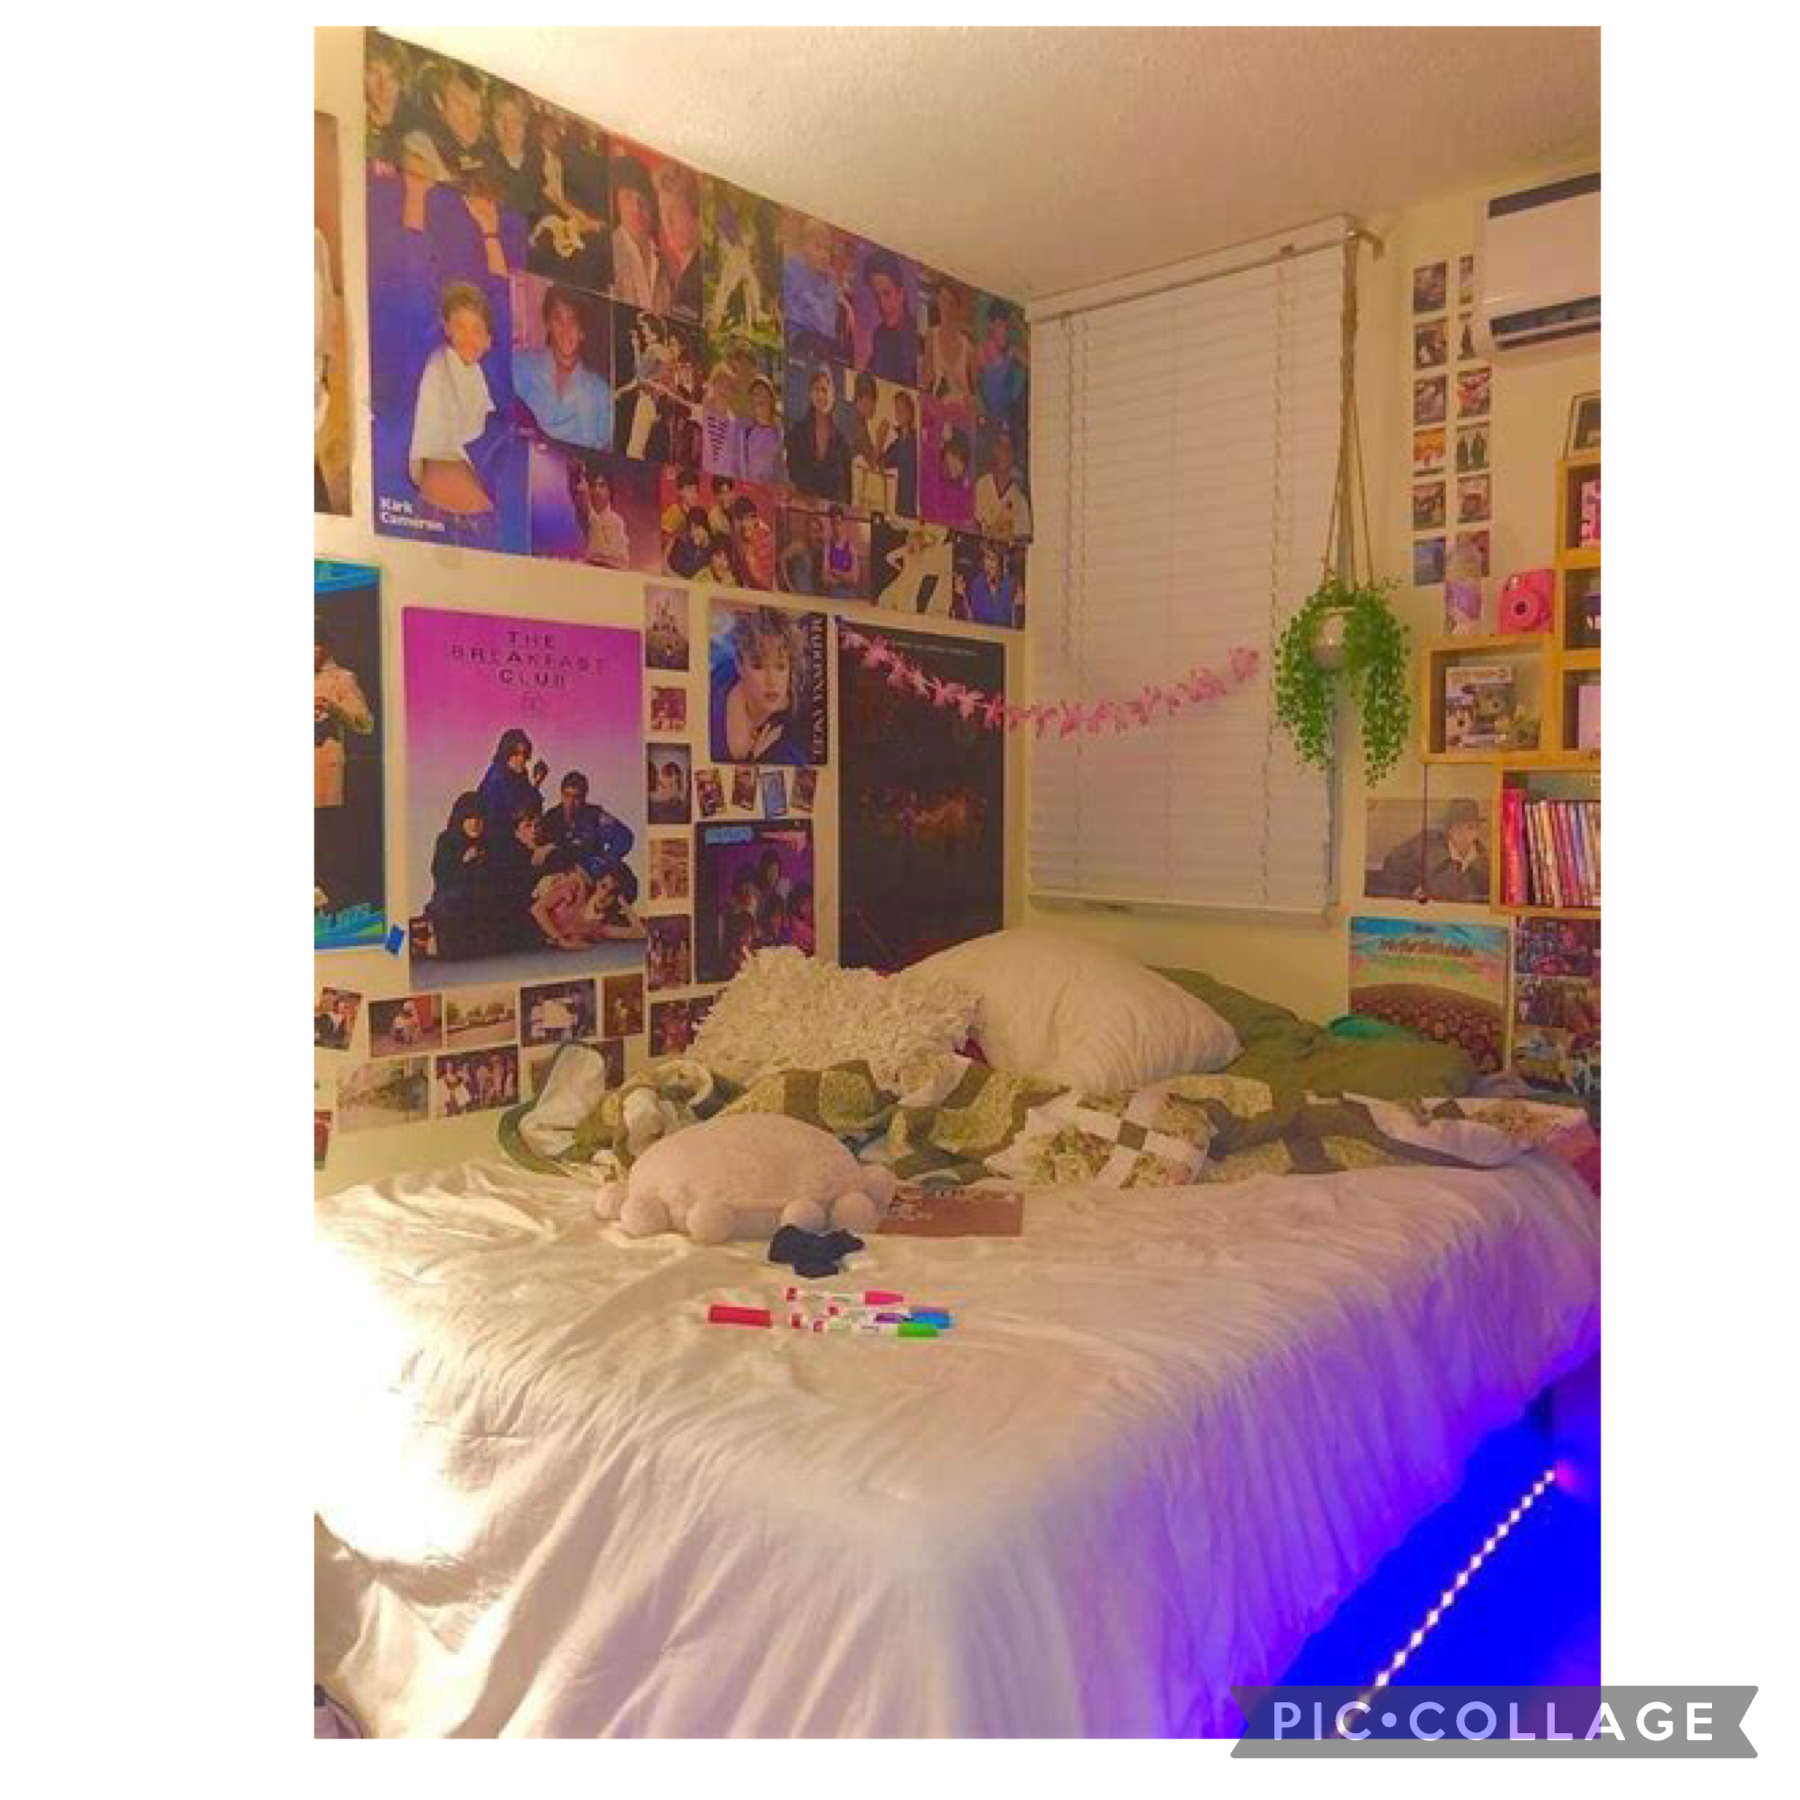 My bedroom (it’s ugly ik)